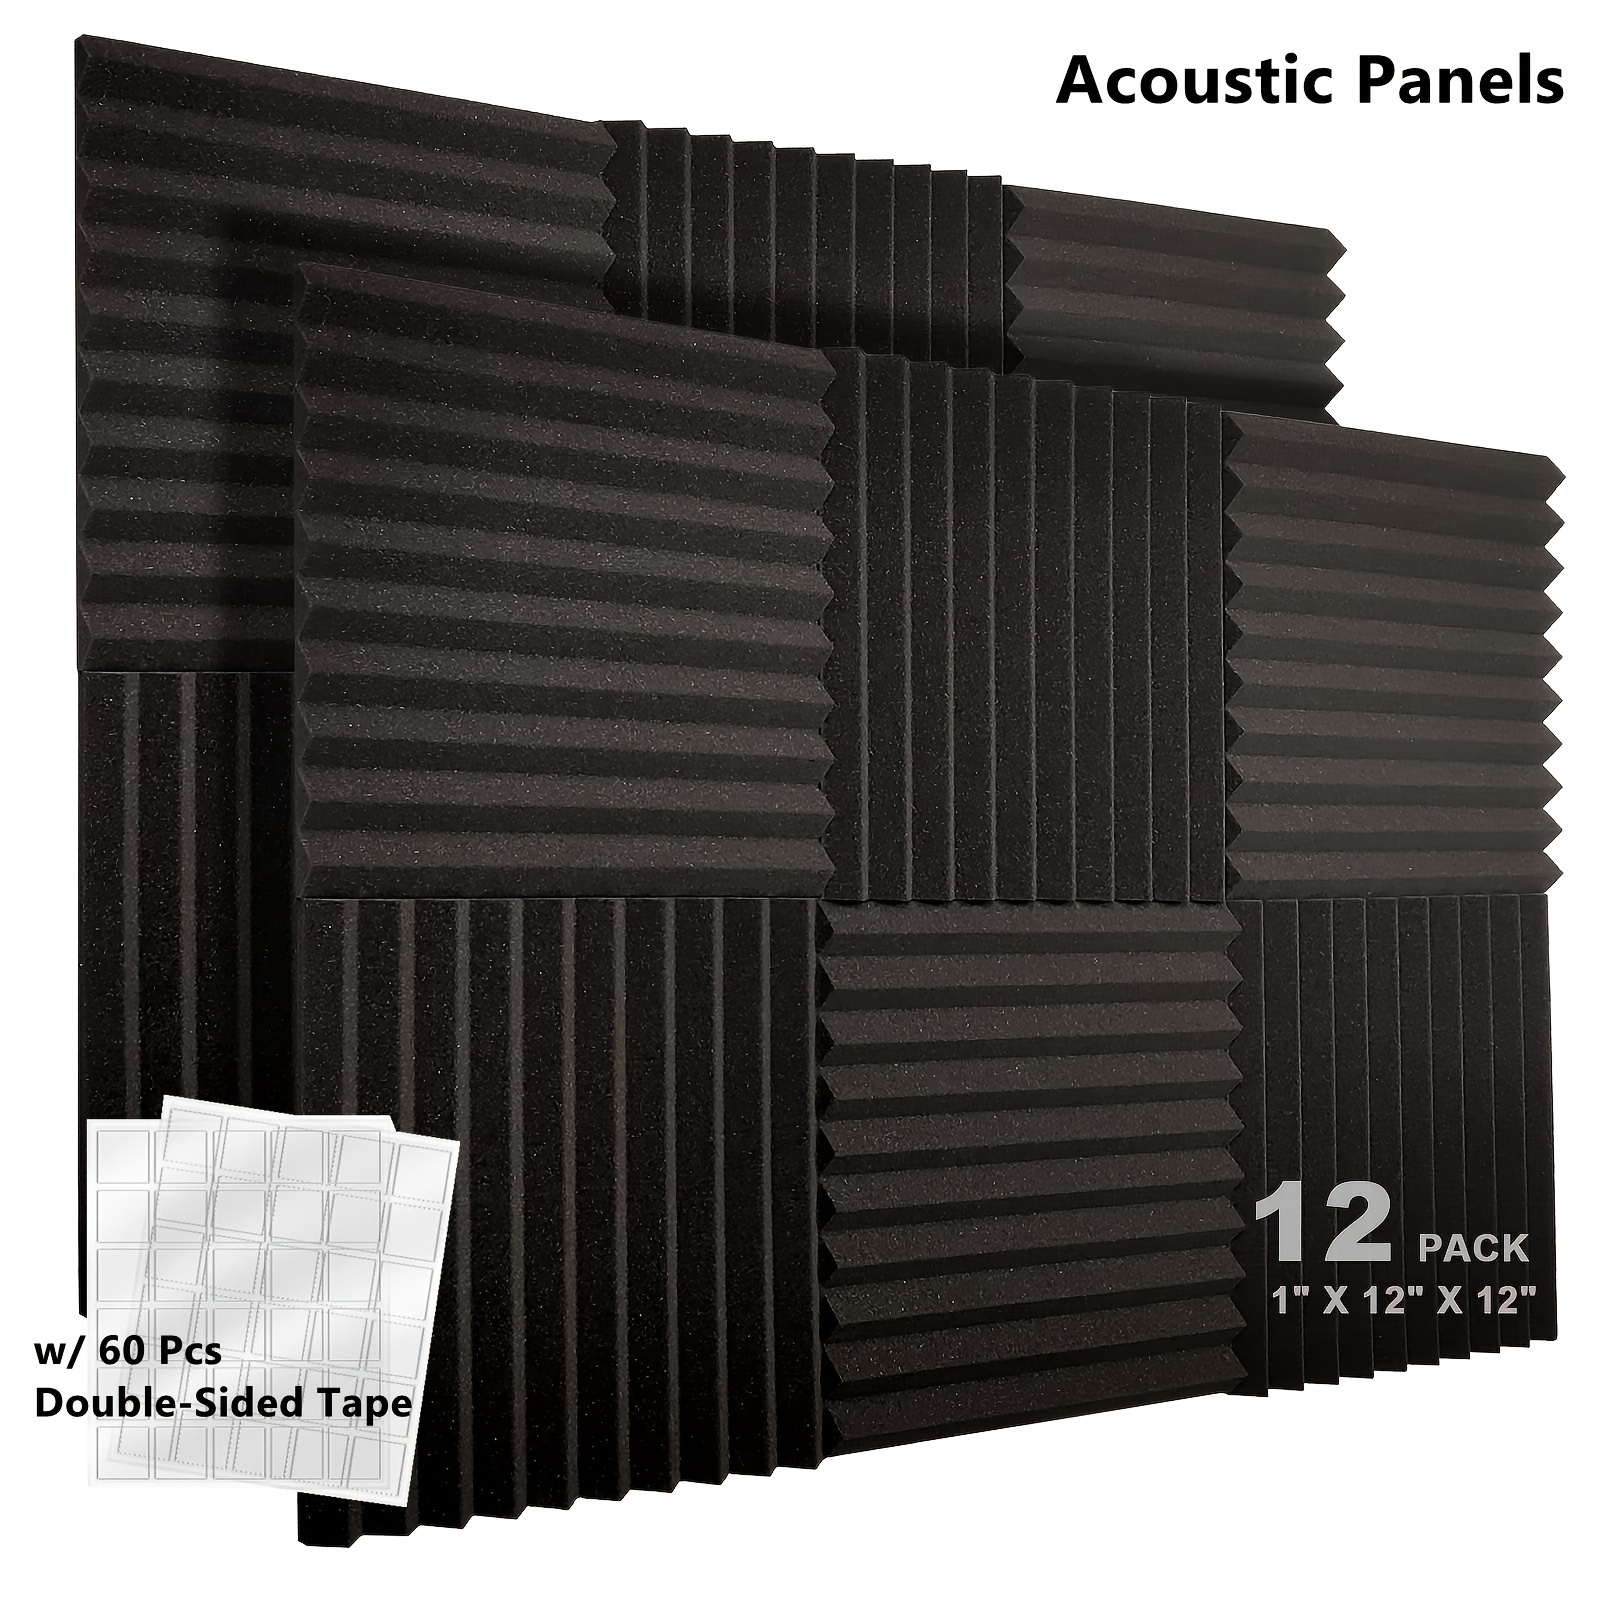  Paquete de 12 paneles acústicos autoadhesivos, paneles de  espuma a prueba de sonido de recuperación rápida de 1 x 12 x 12 pulgadas,  cuñas de espuma acústica de alta densidad, paneles